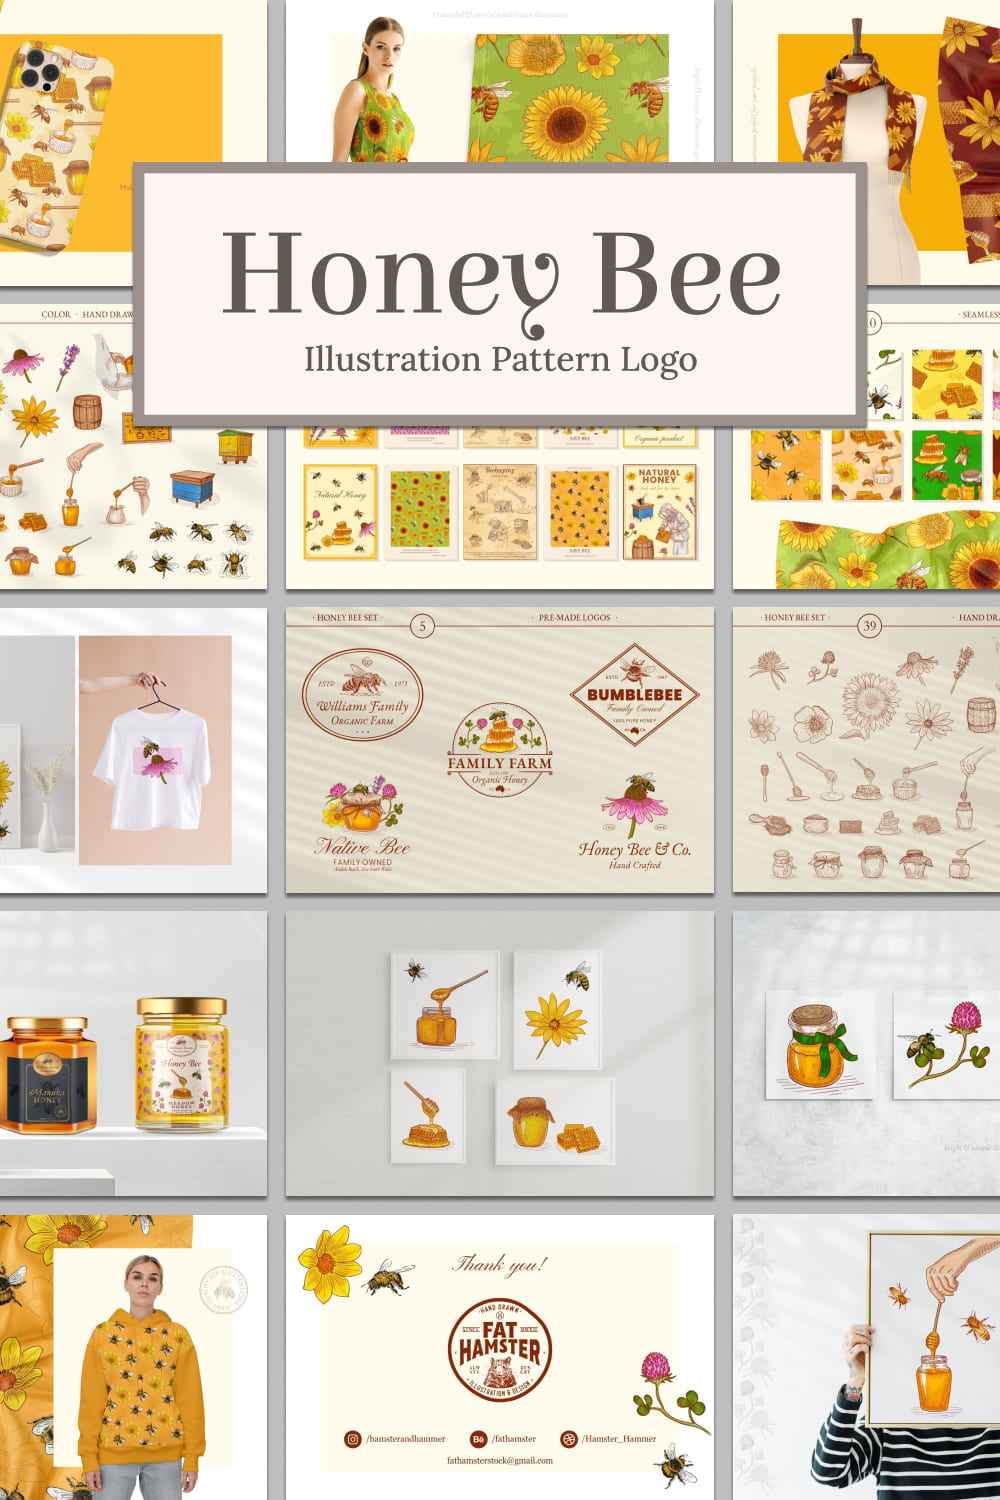 Honey bee illustration pattern logo - pinterest image preview.